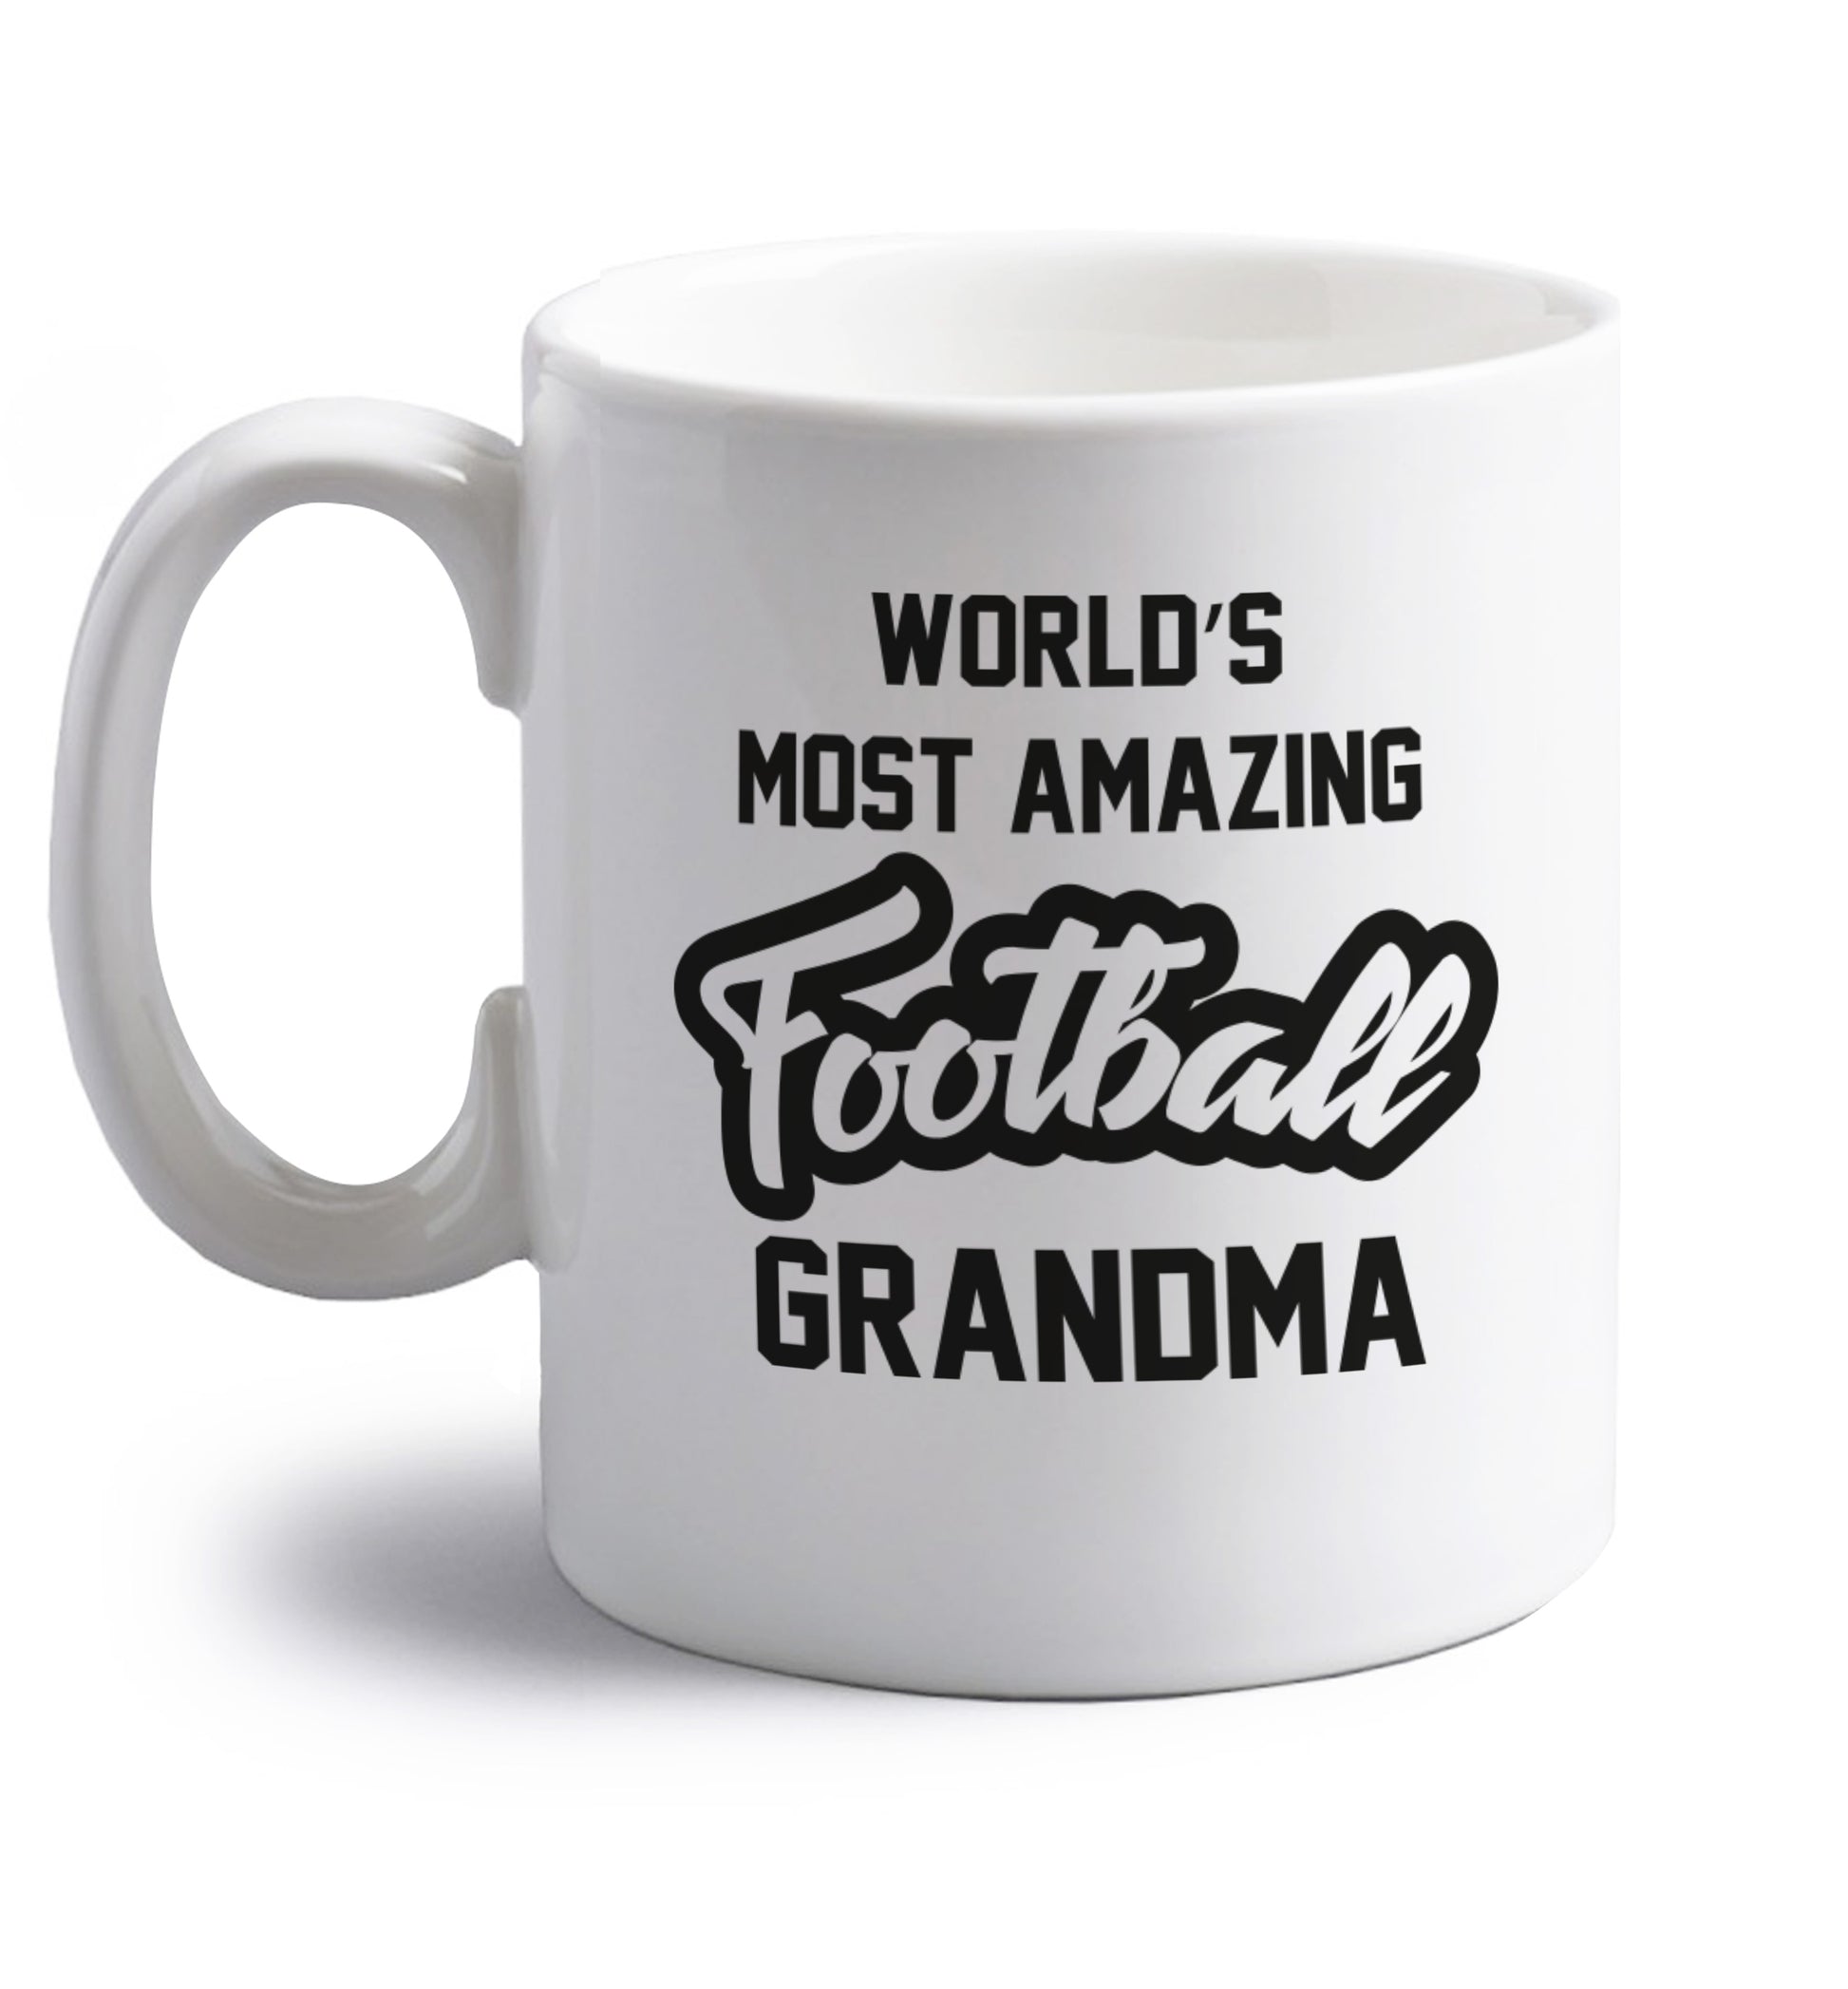 Worlds most amazing football grandma right handed white ceramic mug 